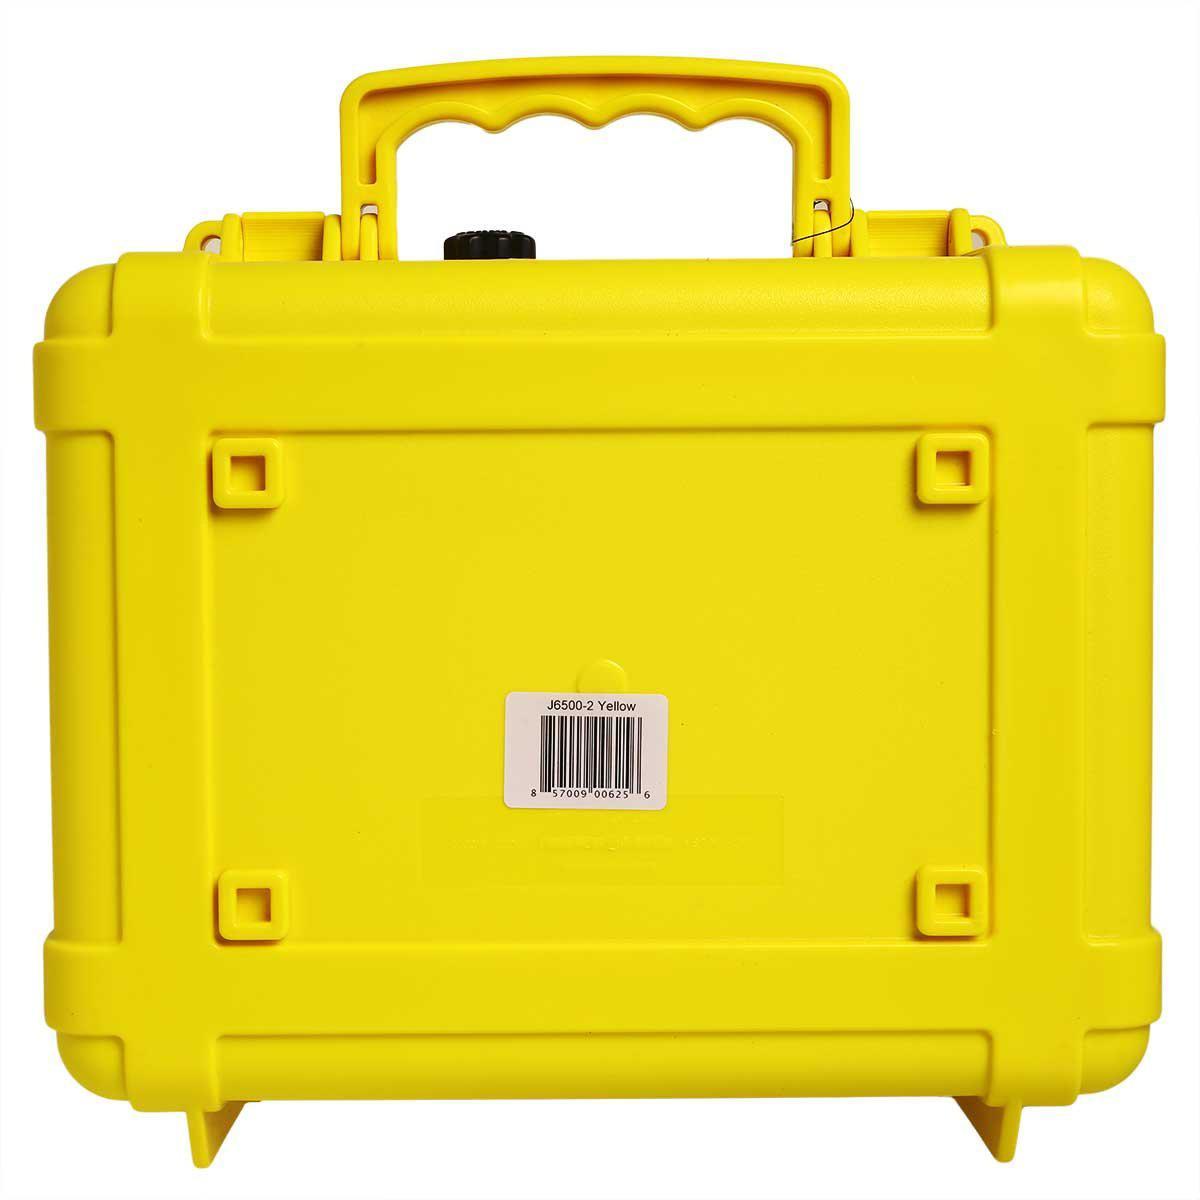 J6500-2 Case Yellow Accessories